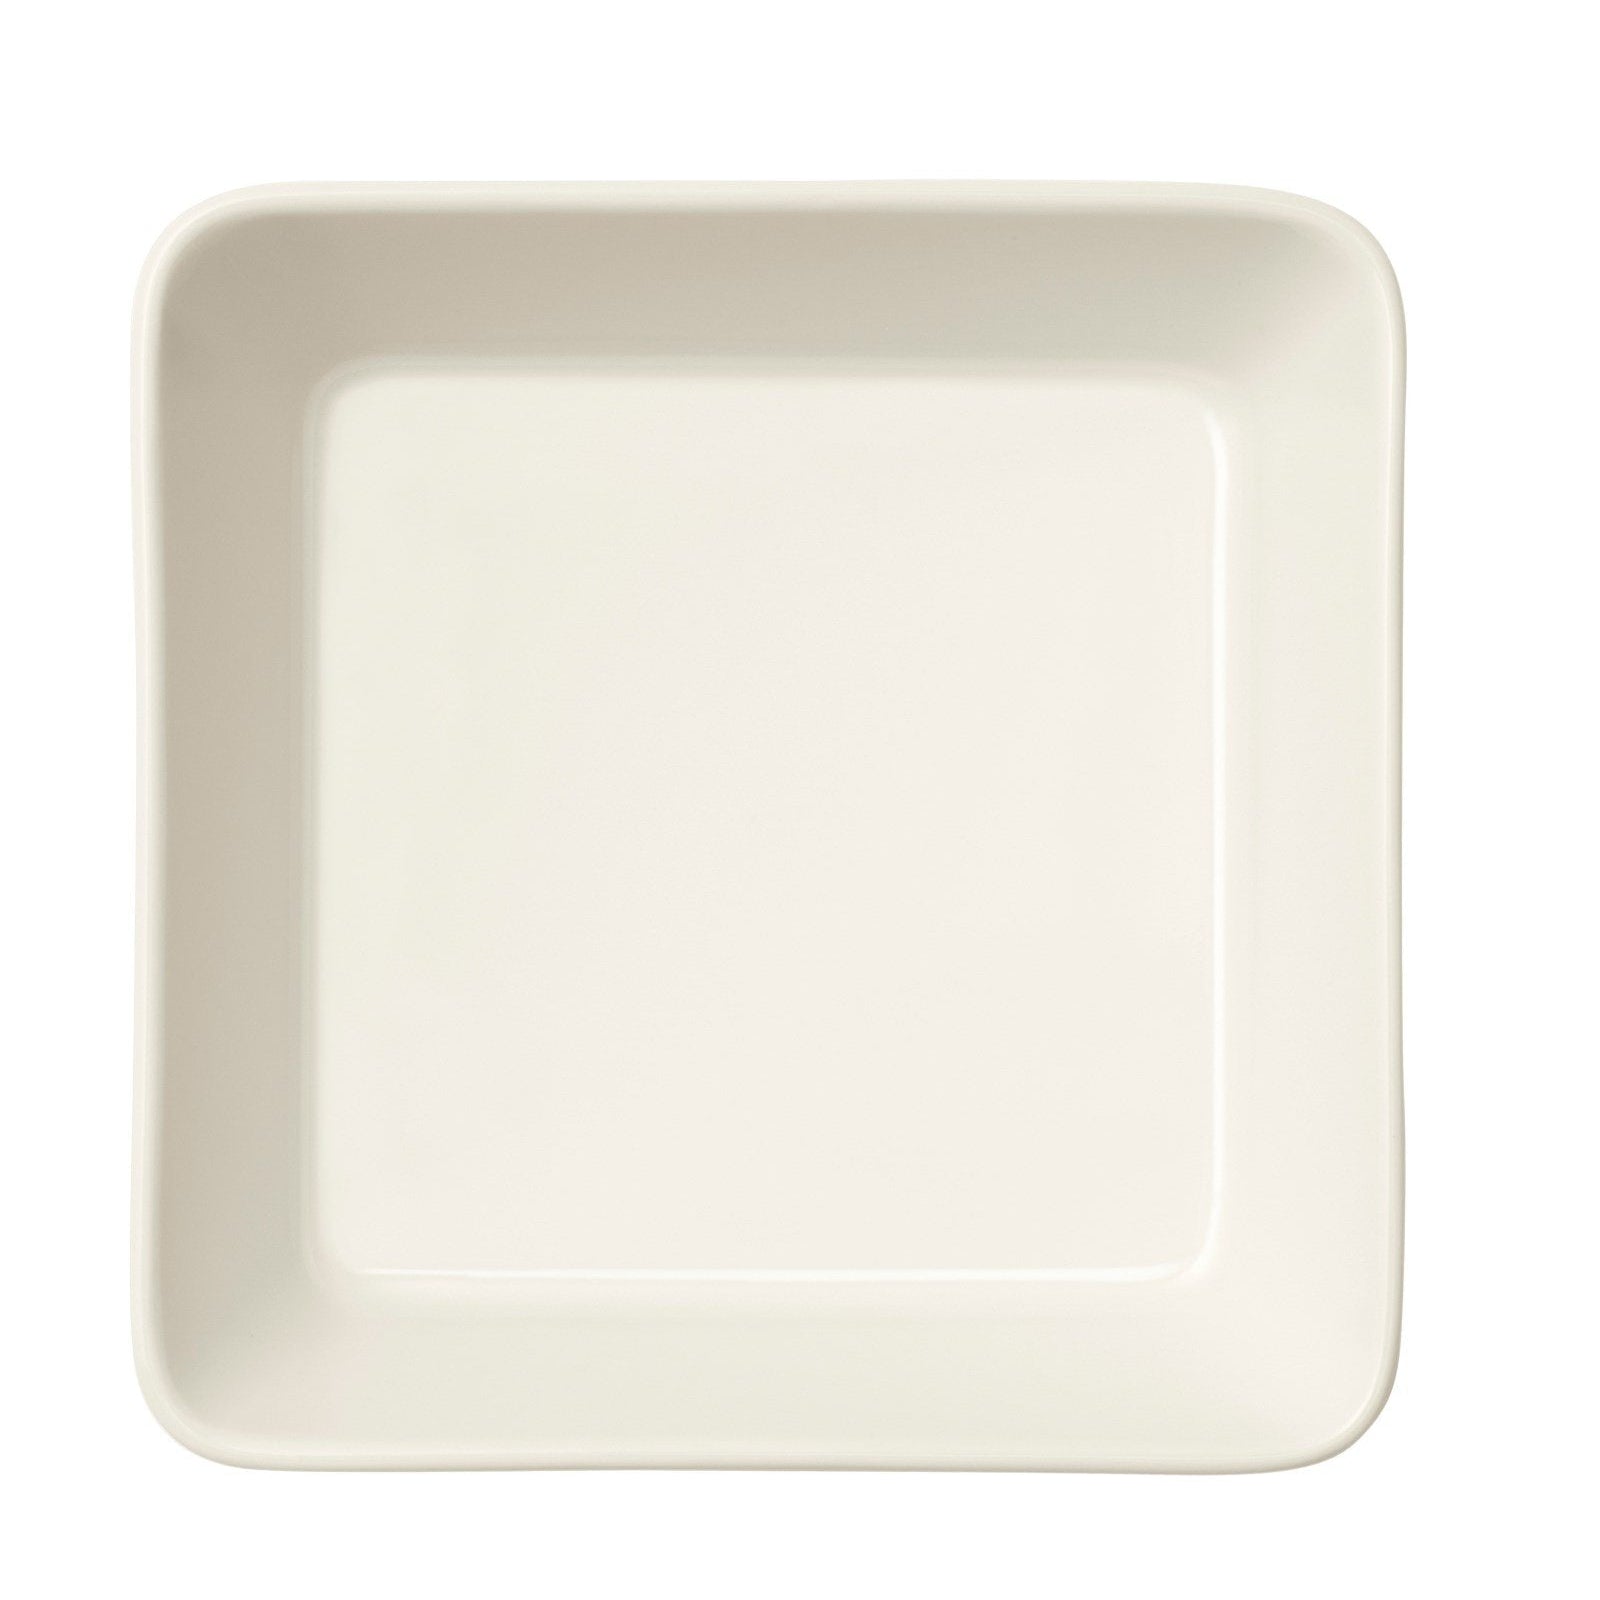 Iittala Teema Bowl White, 12x12 cm